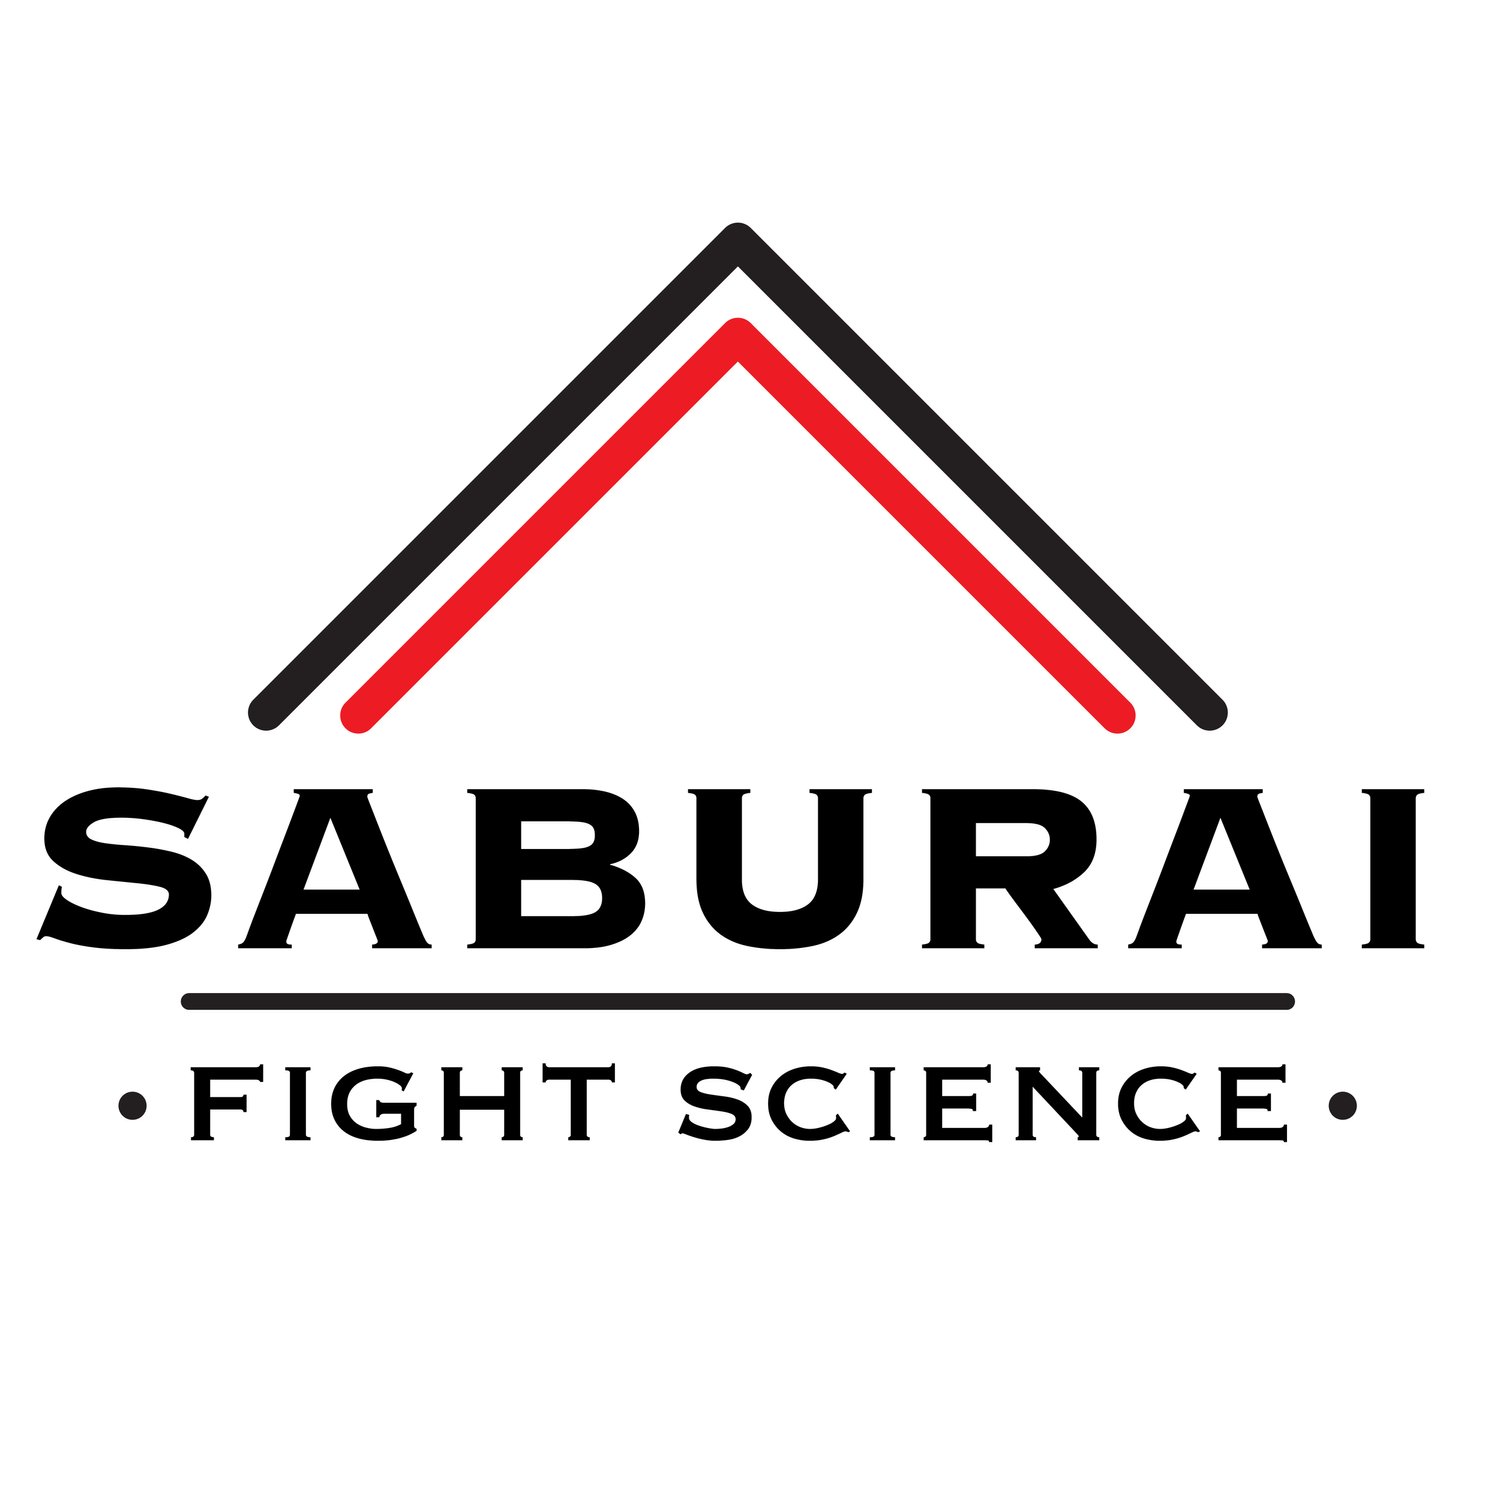 Saburai logo